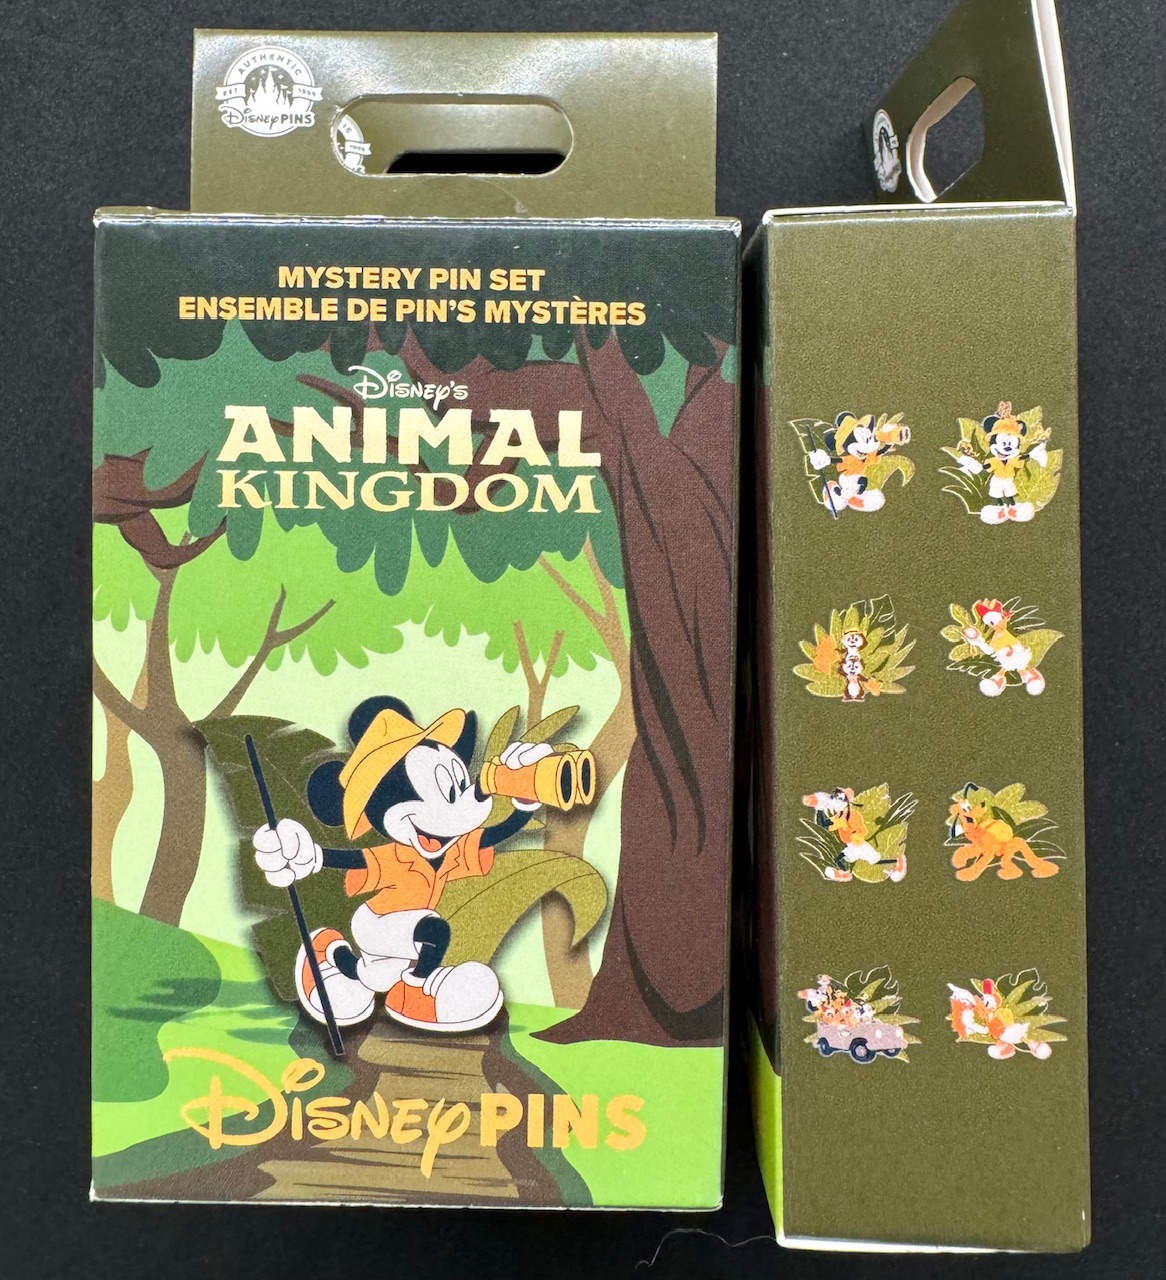 Disney's Animal Kingdom Puzzle Mystery Pin Set at Walt Disney World -  Disney Pins Blog